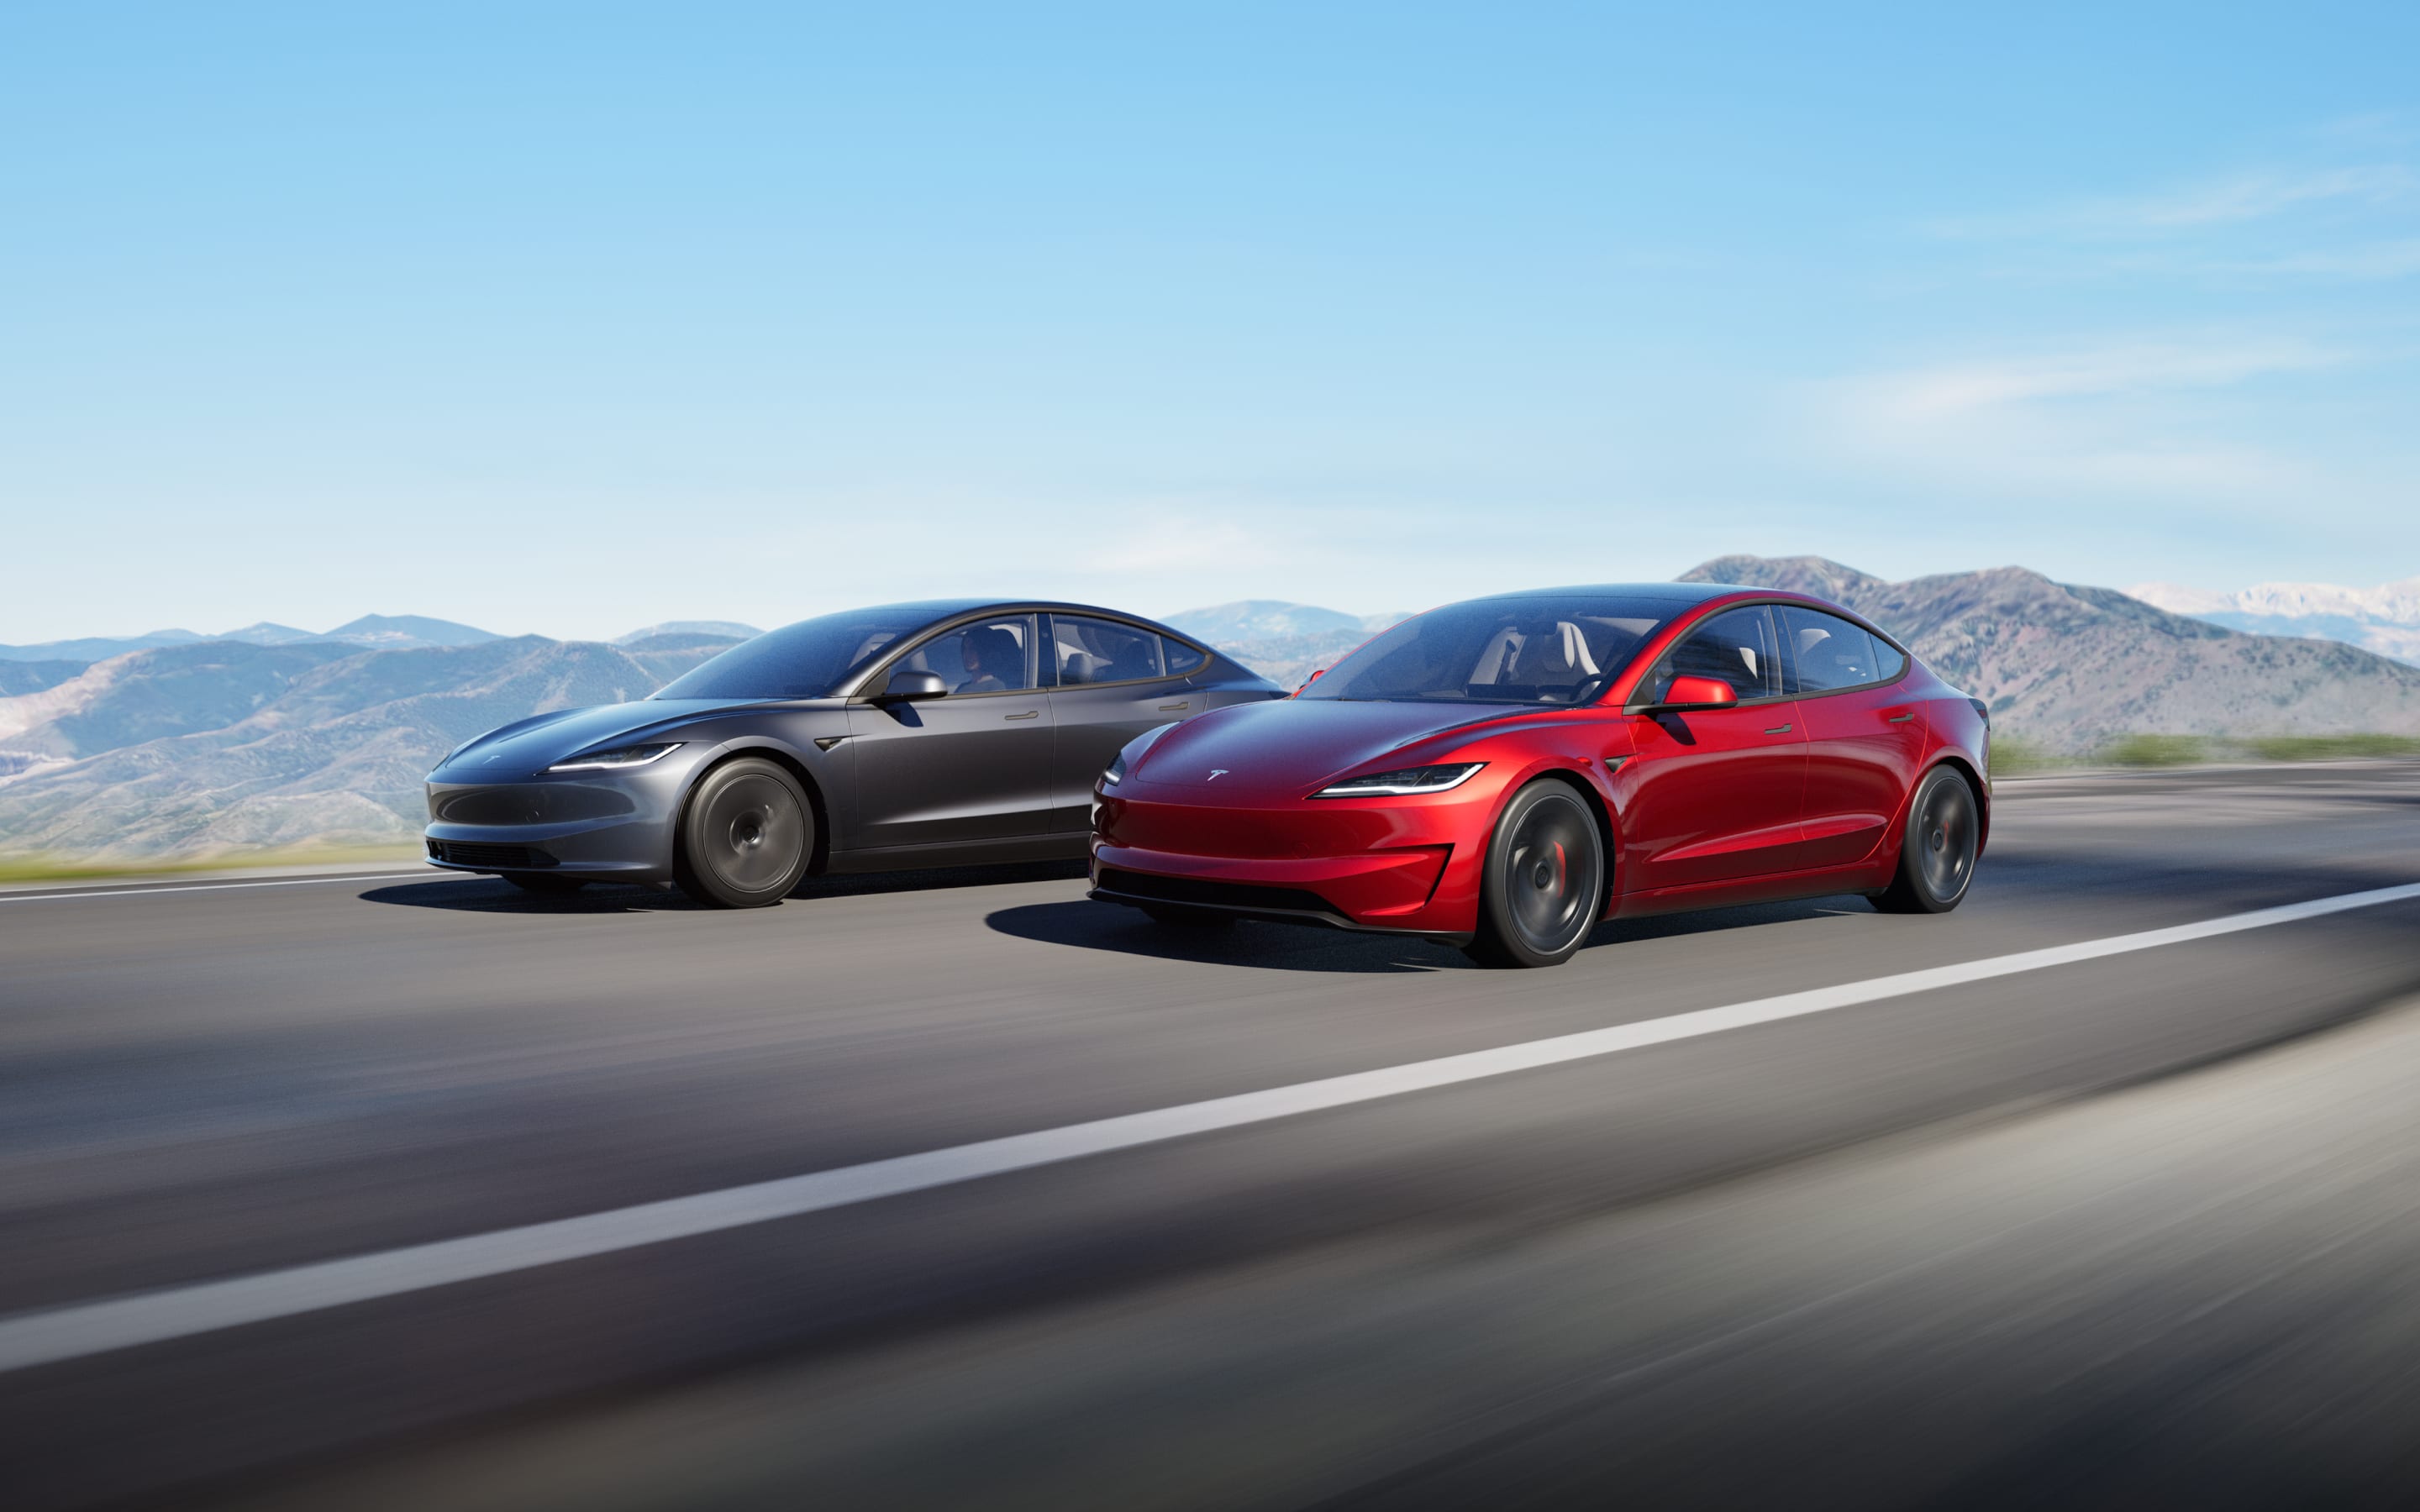 Crveni Model 3 vozi se uz sivi Model 3 po cesti s planinama u pozadini